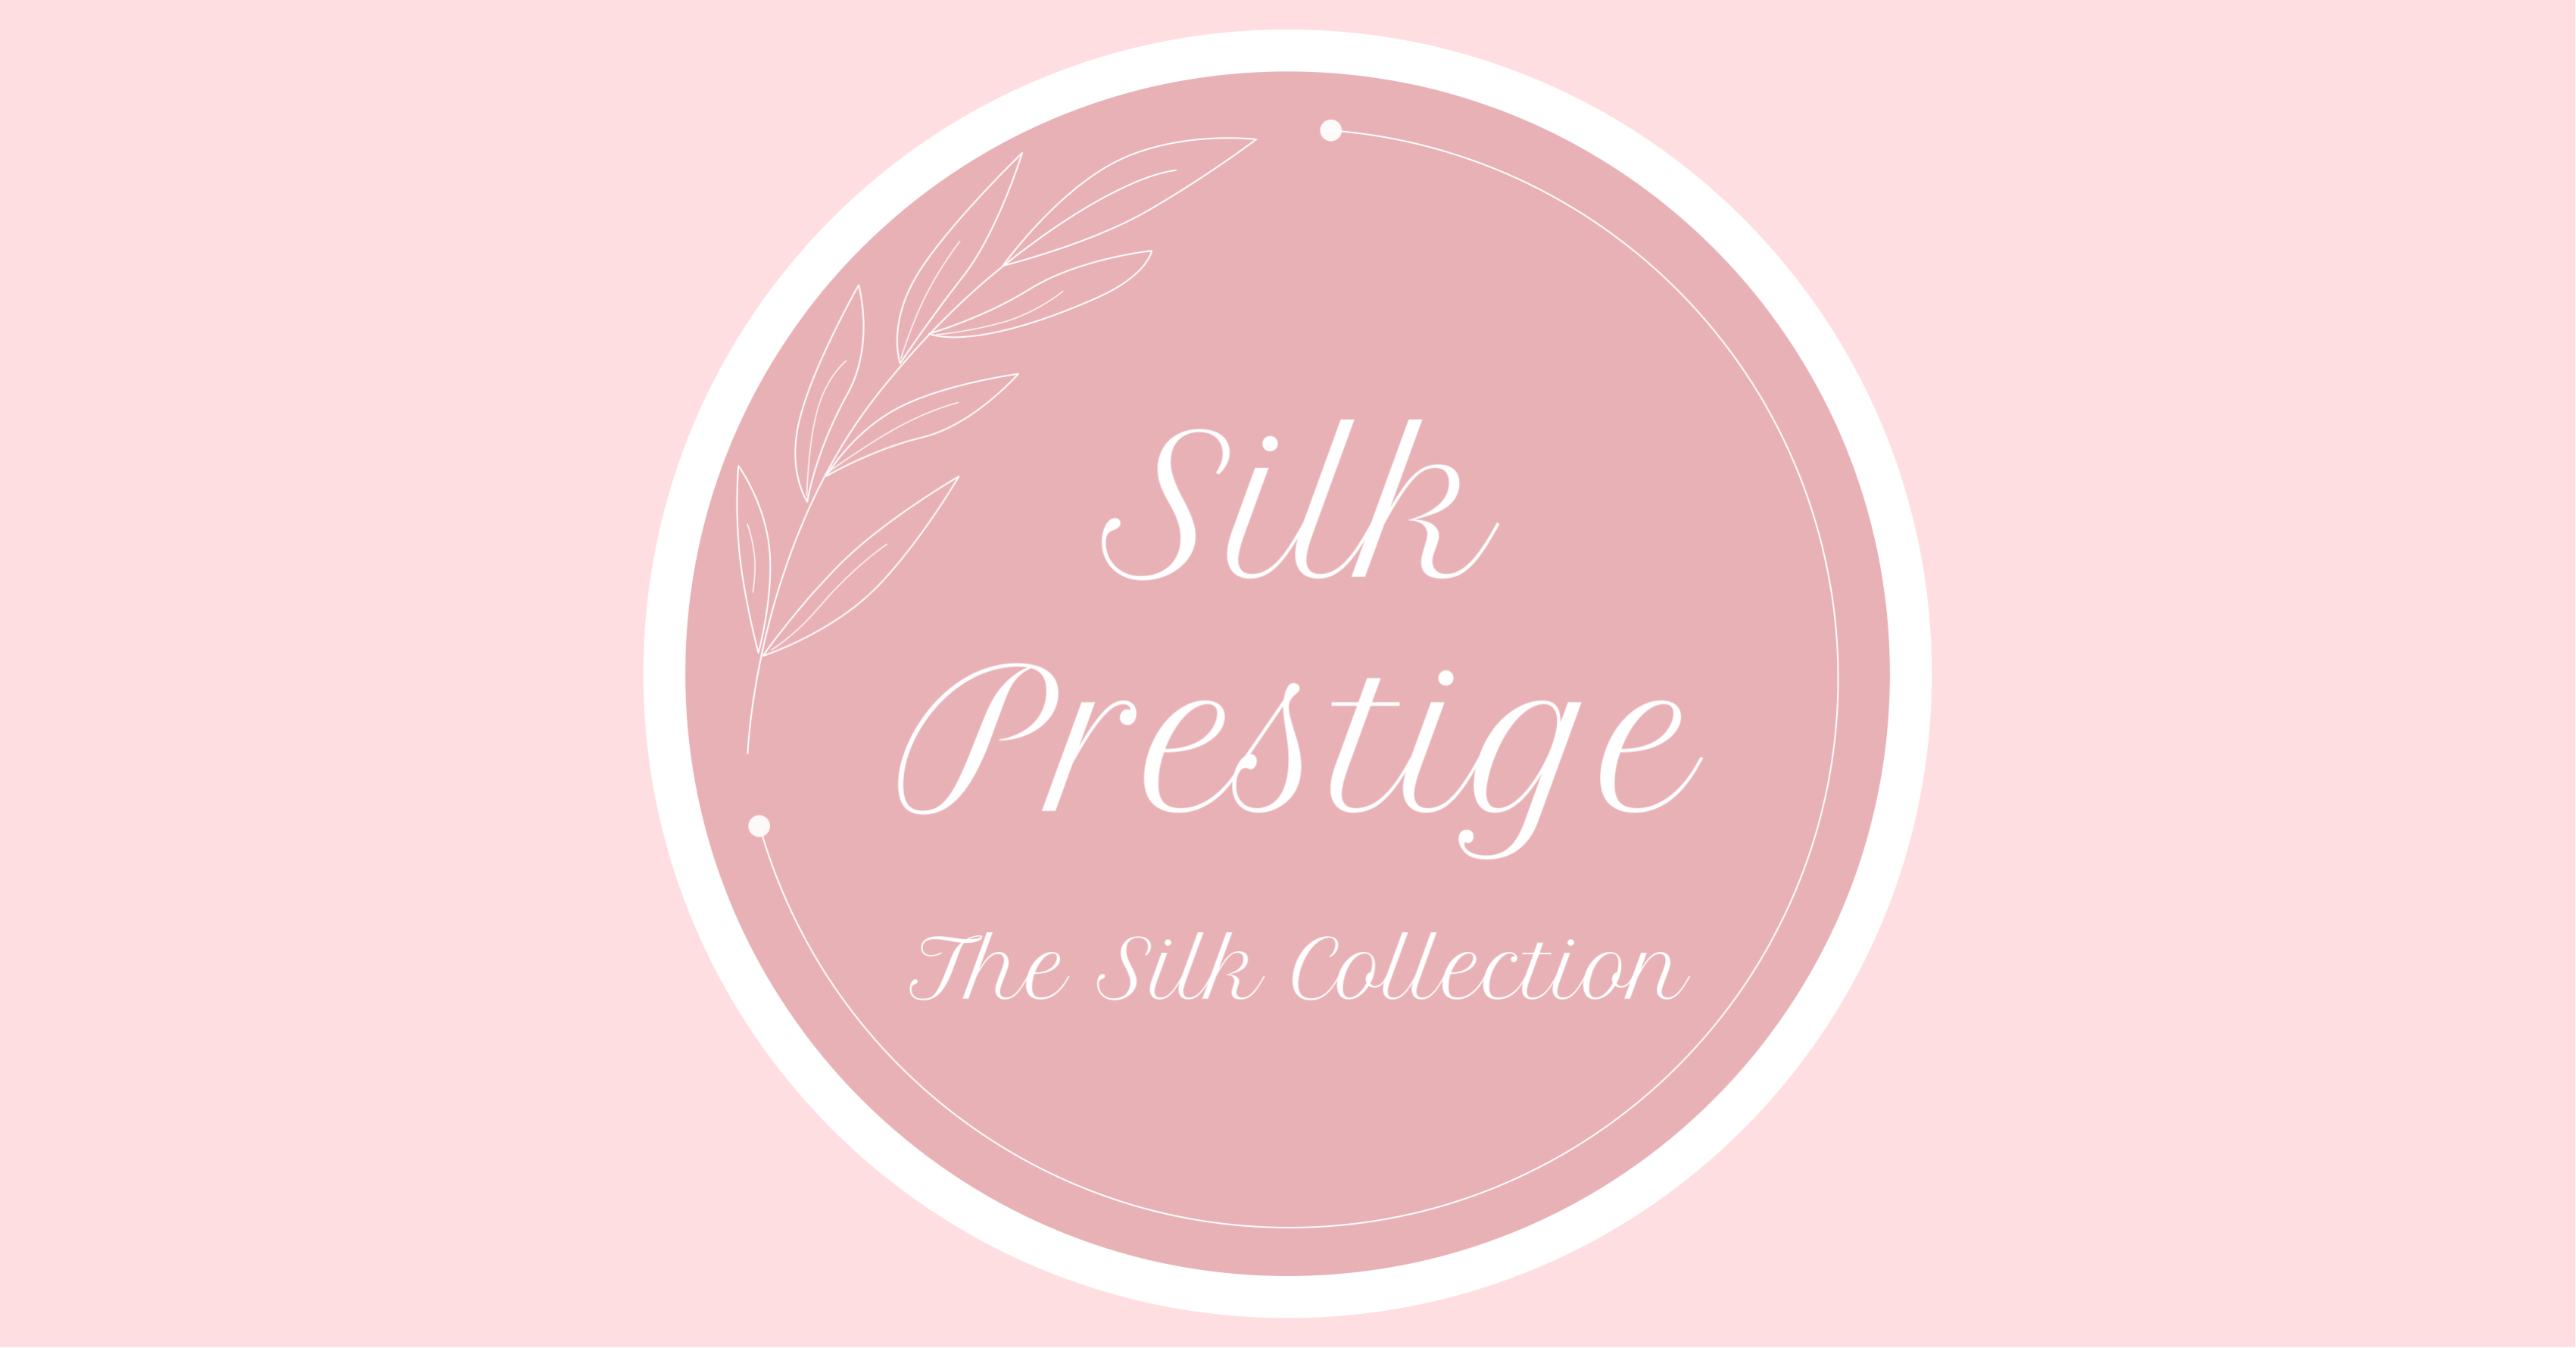 Silk Prestige